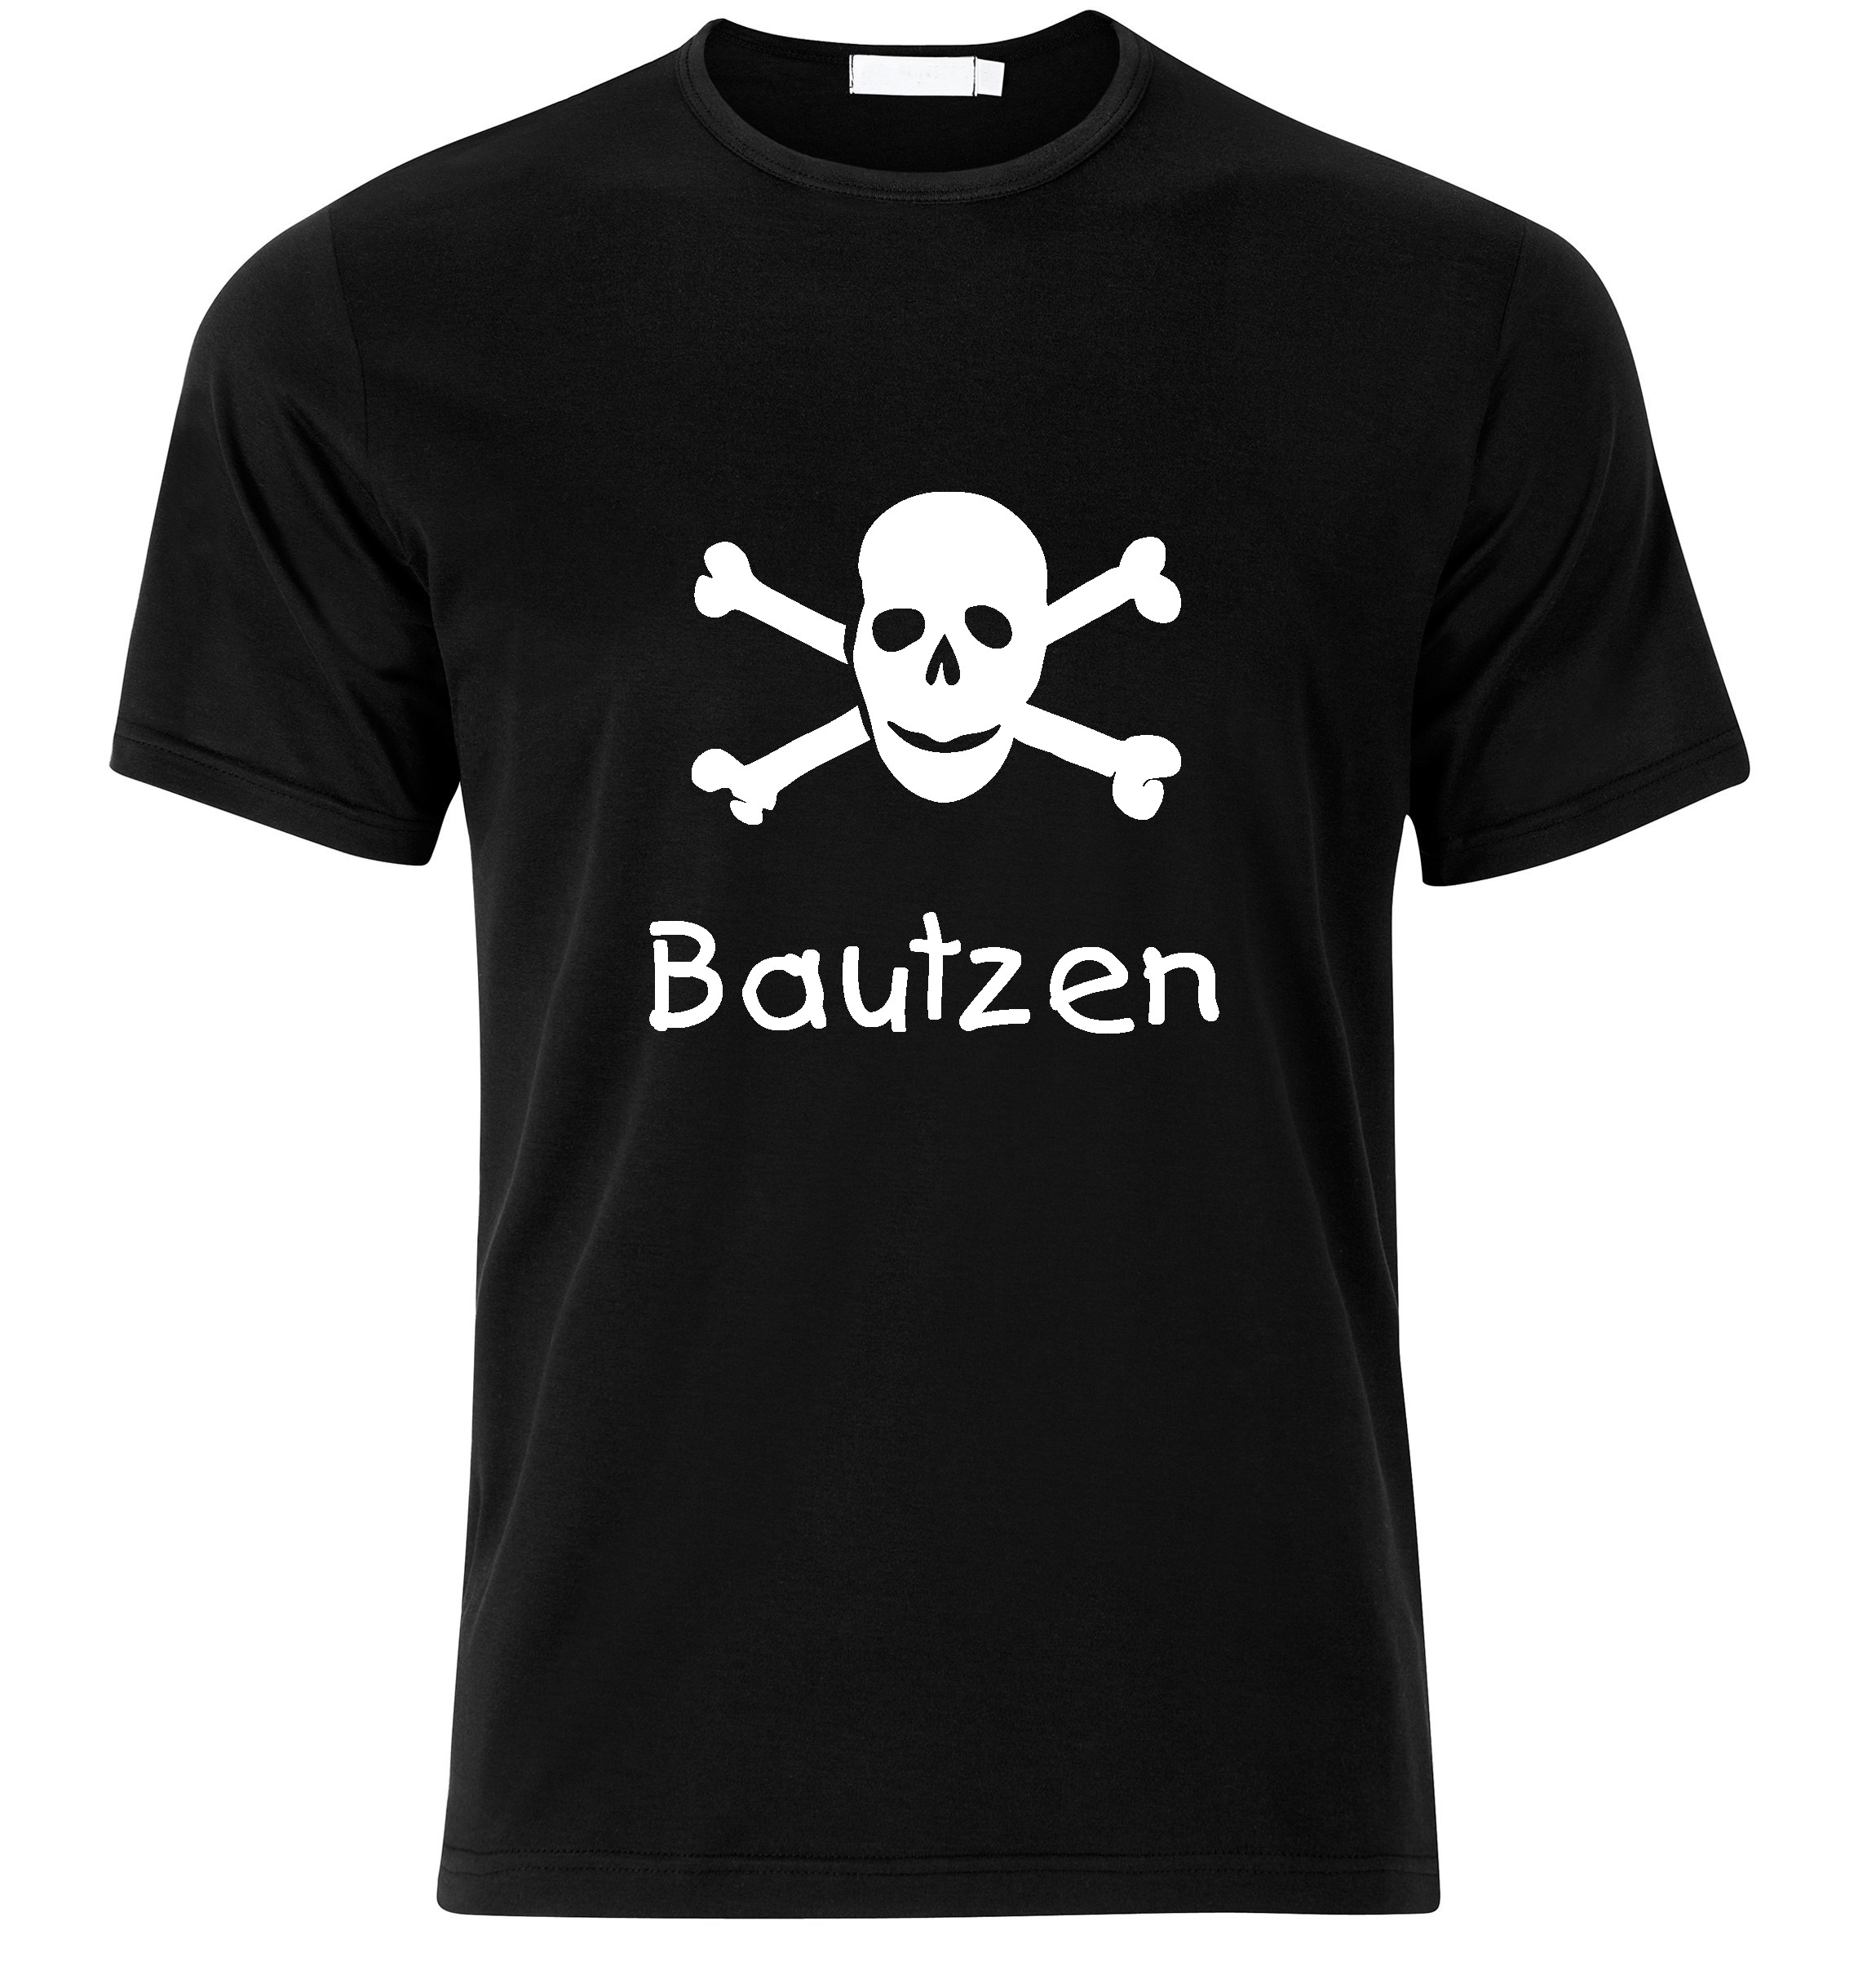 T-Shirt Bautzen Jolly Roger, Totenkopf